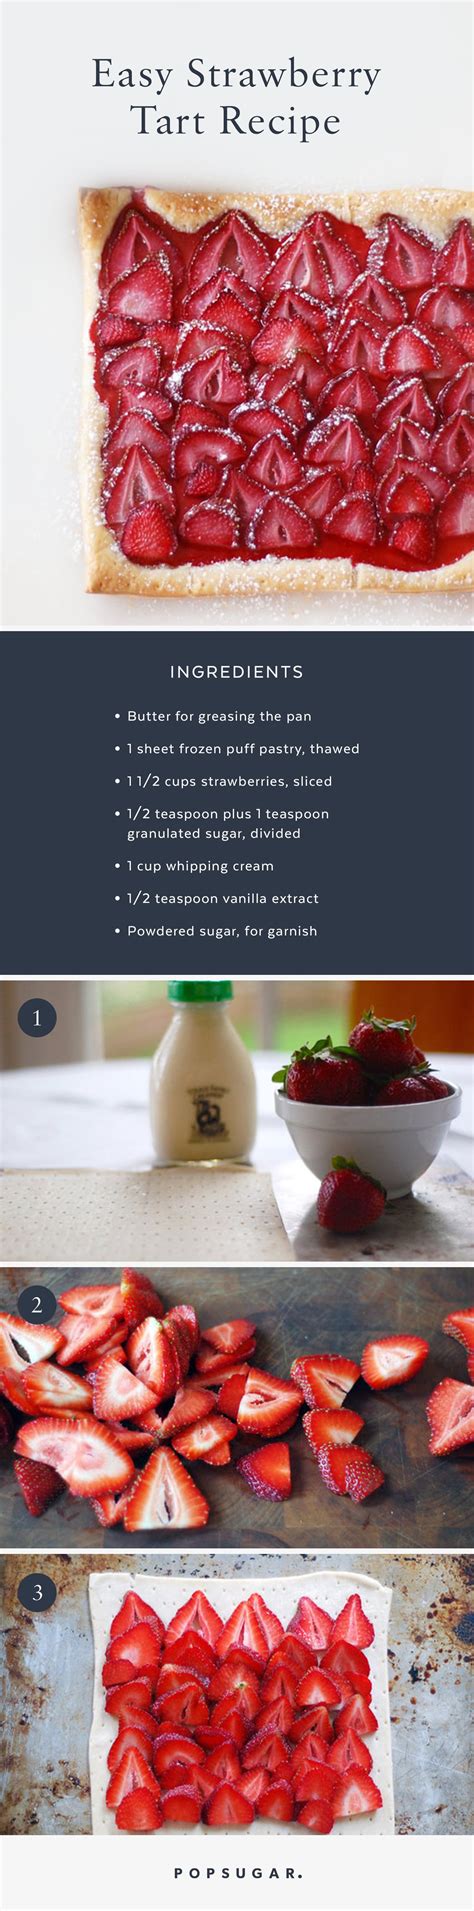 strawberry tart easy recipe popsugar food